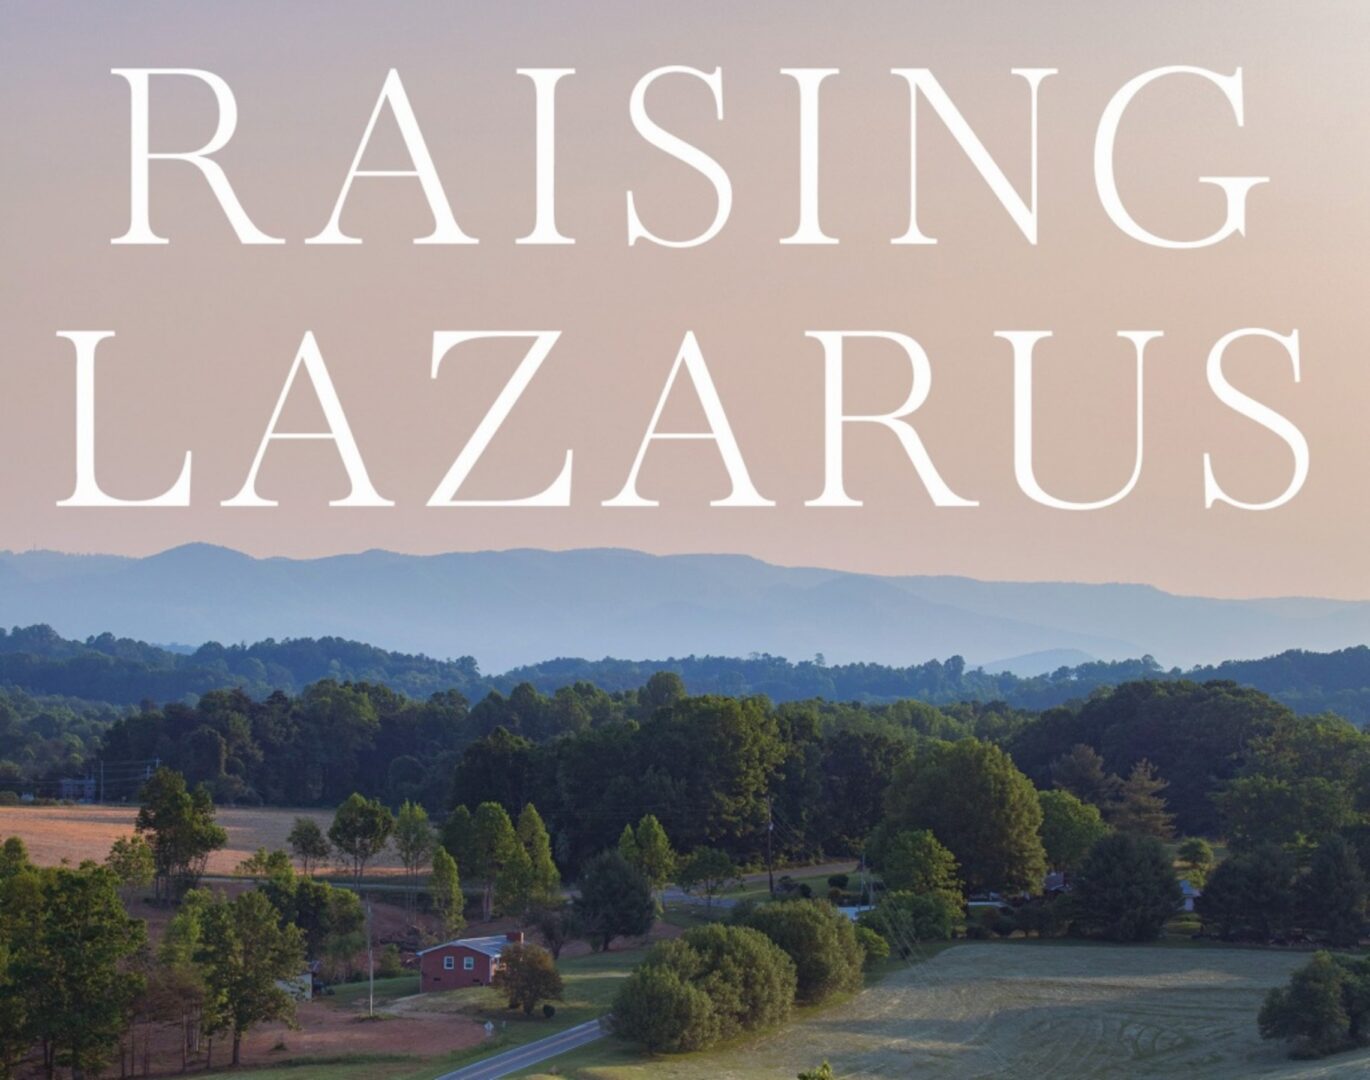 Author Beth Macy talks about drug overdose crisis in Raising Lazarus